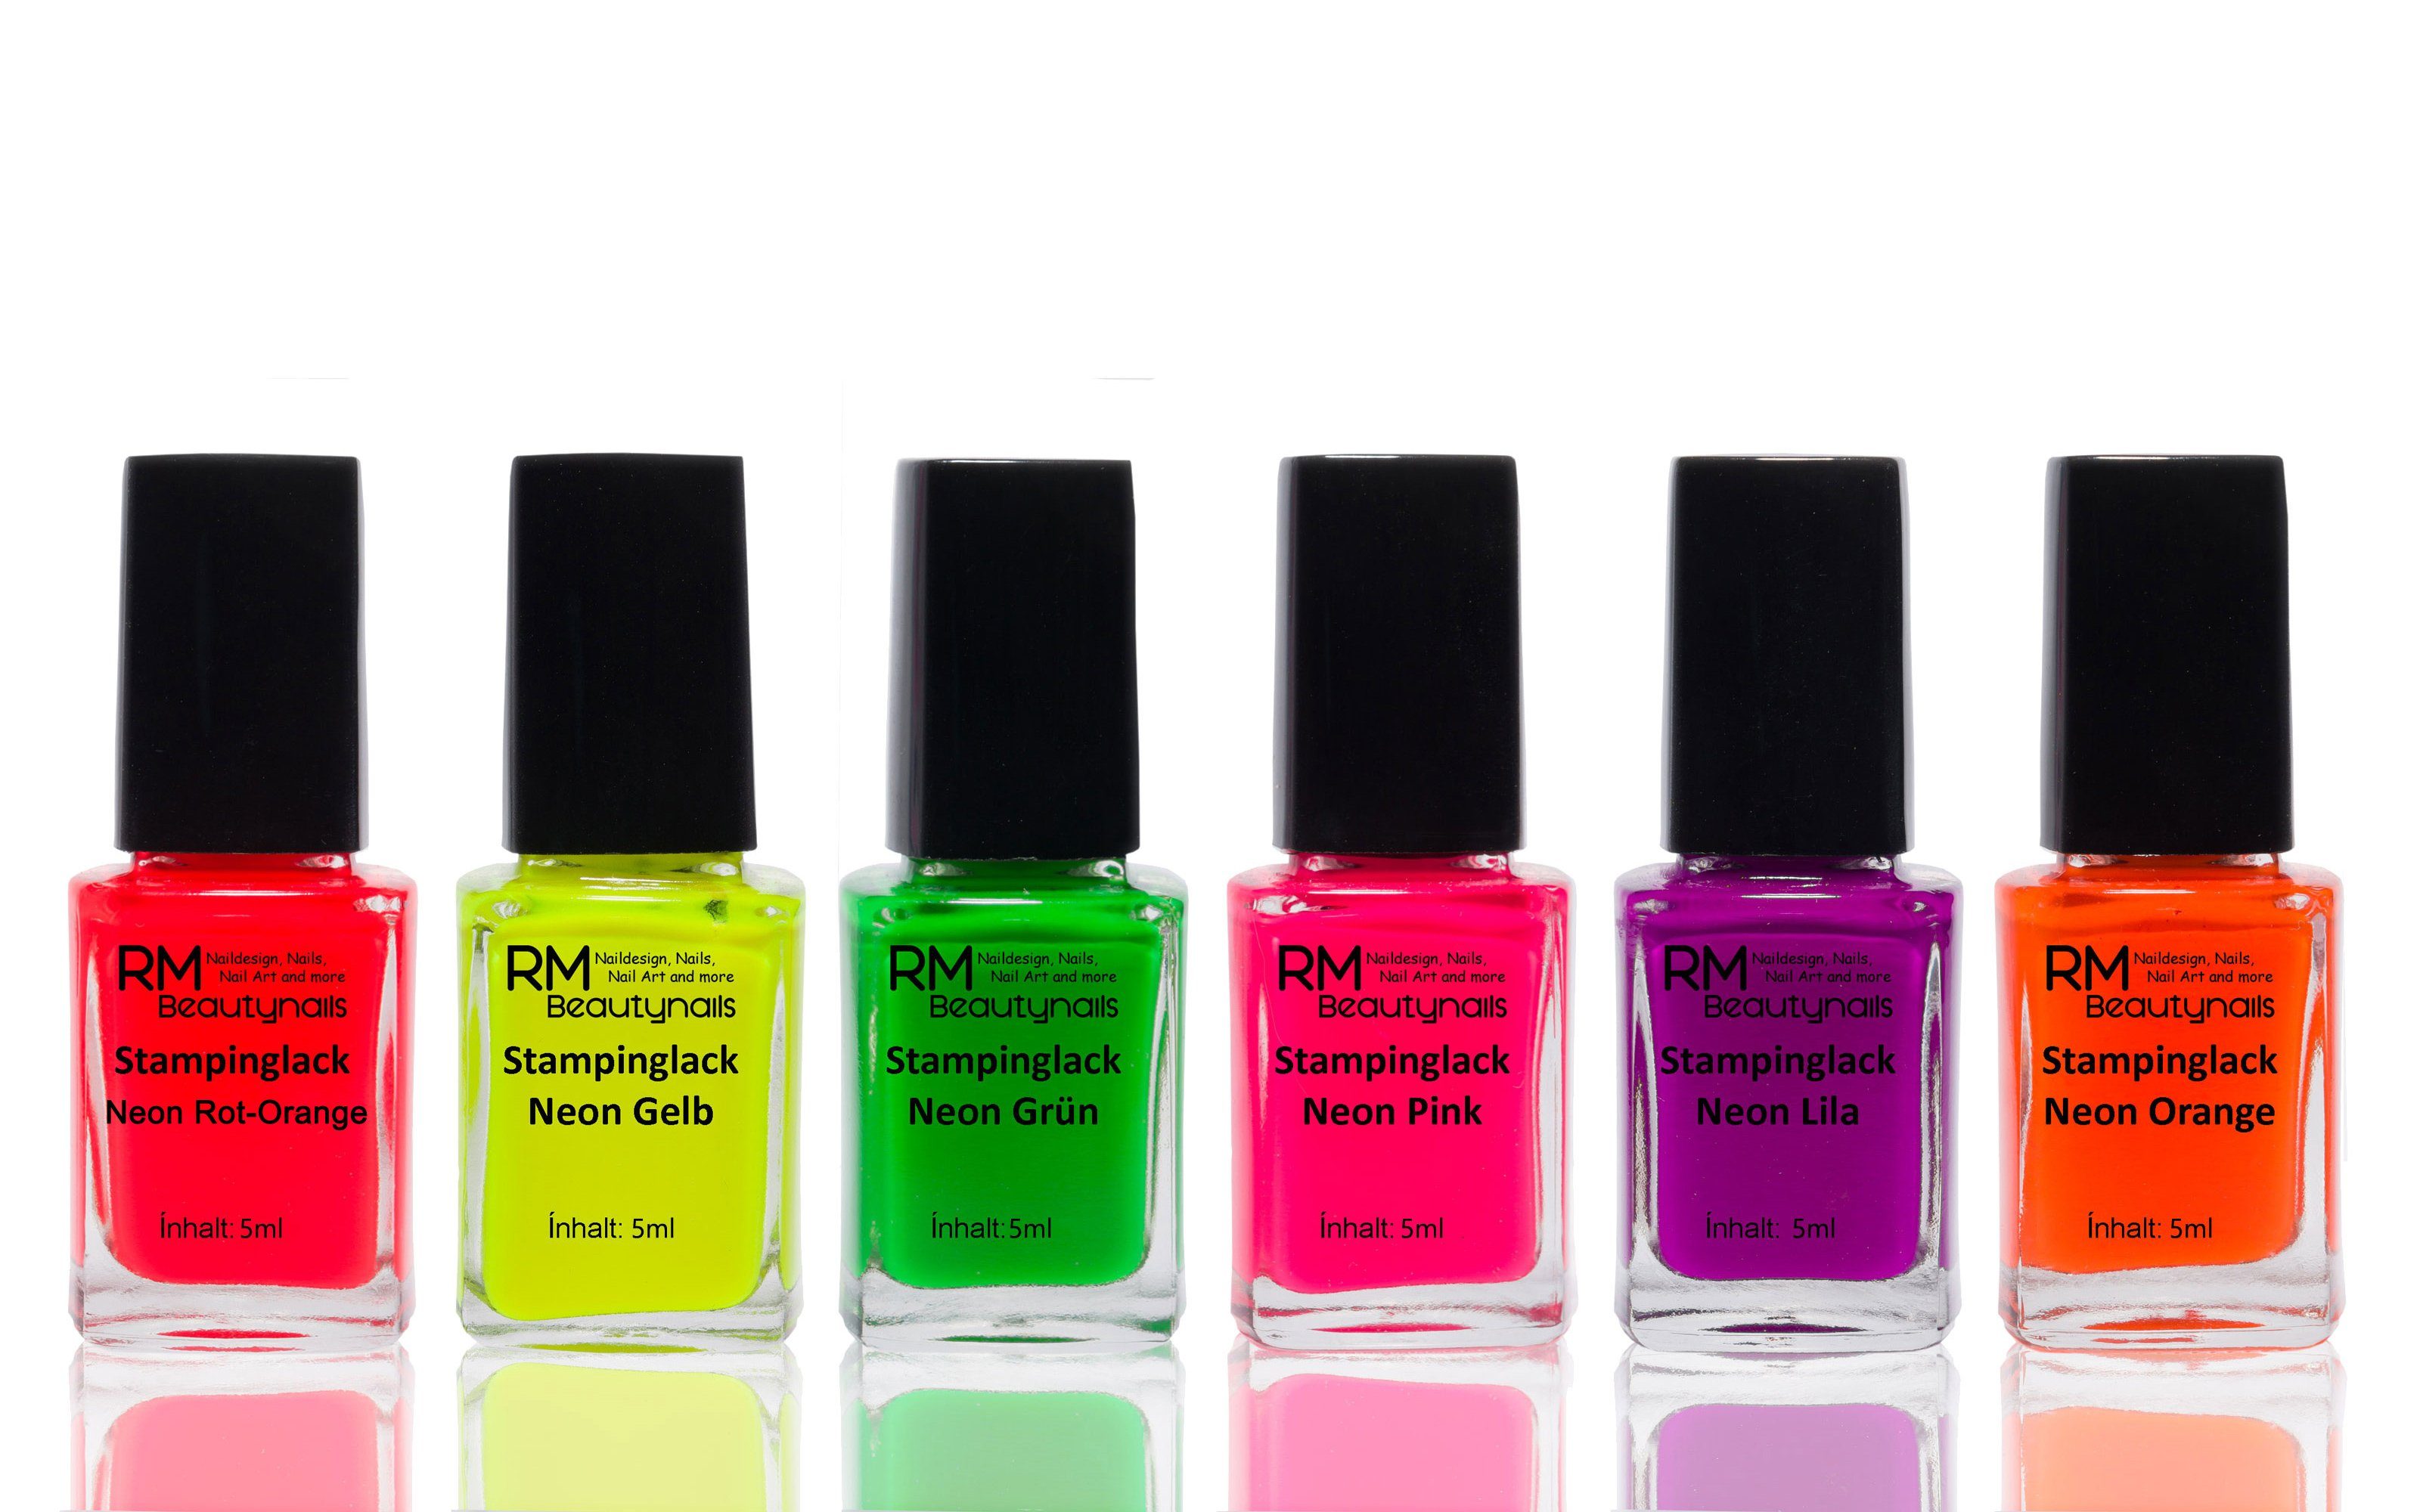 RM Beautynails Nagellack-Set Neon Nagellack Stamping Set Rot Gelb Grün Pink Lila Orange Nail Polish, Schnell trocknend